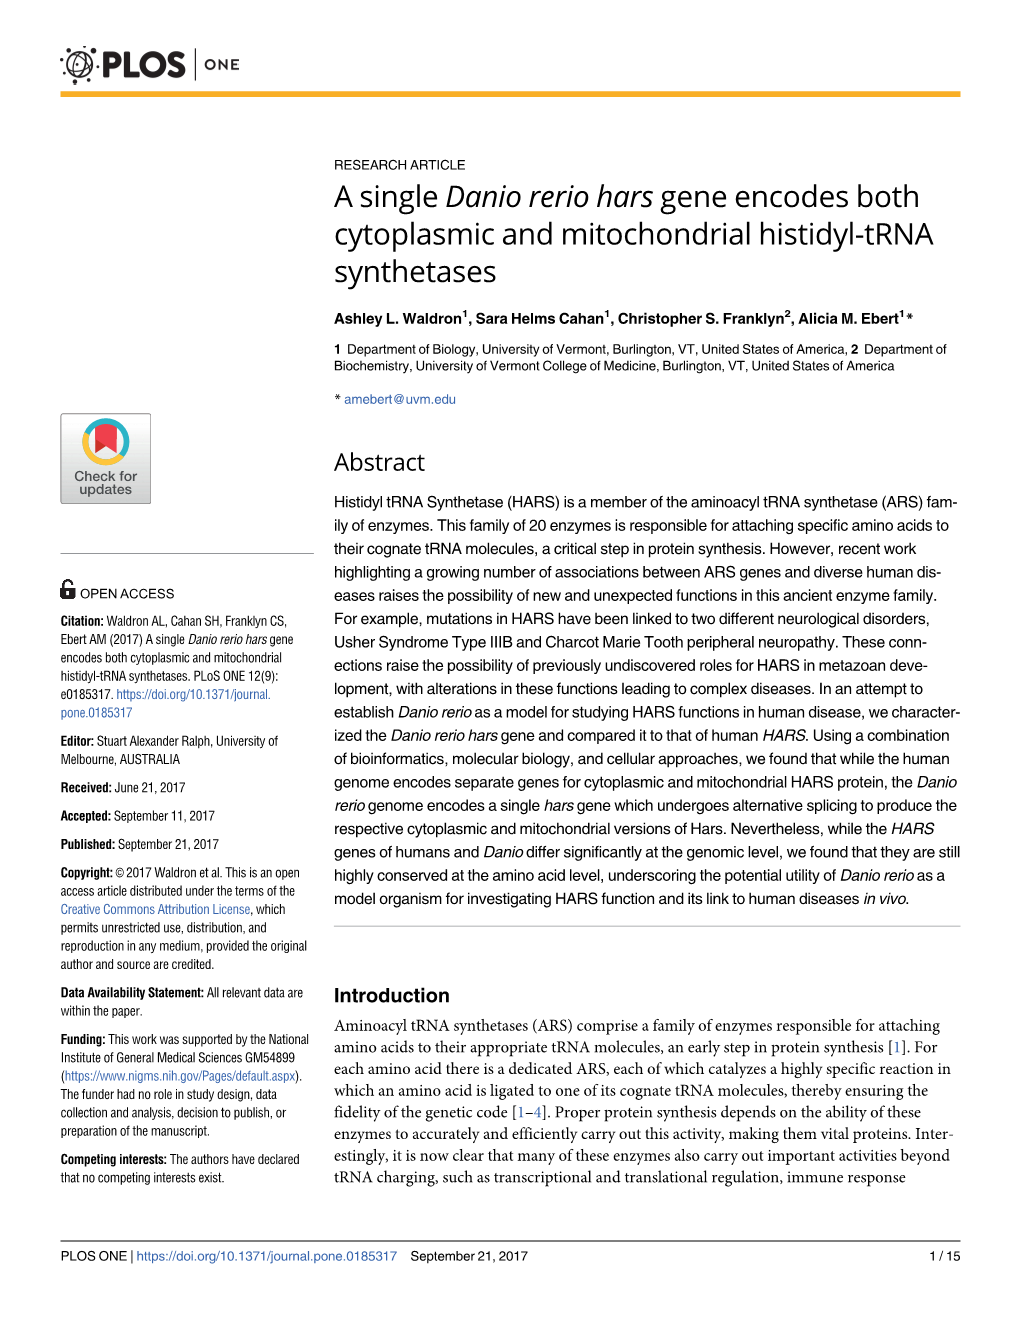 A Single Danio Rerio Hars Gene Encodes Both Cytoplasmic and Mitochondrial Histidyl-Trna Synthetases